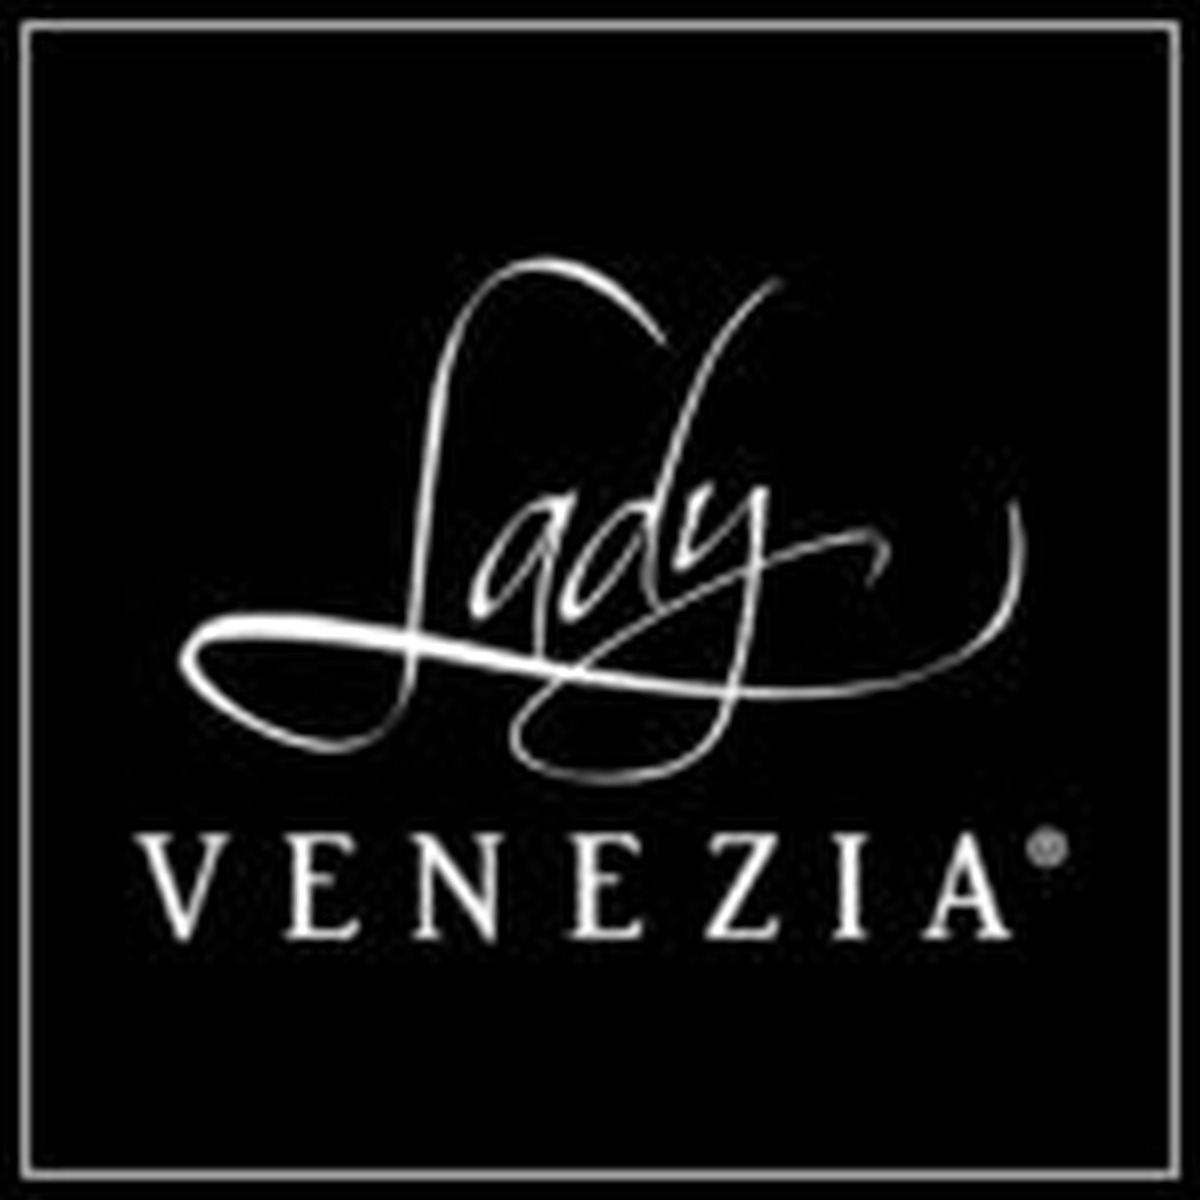 Lady venezia